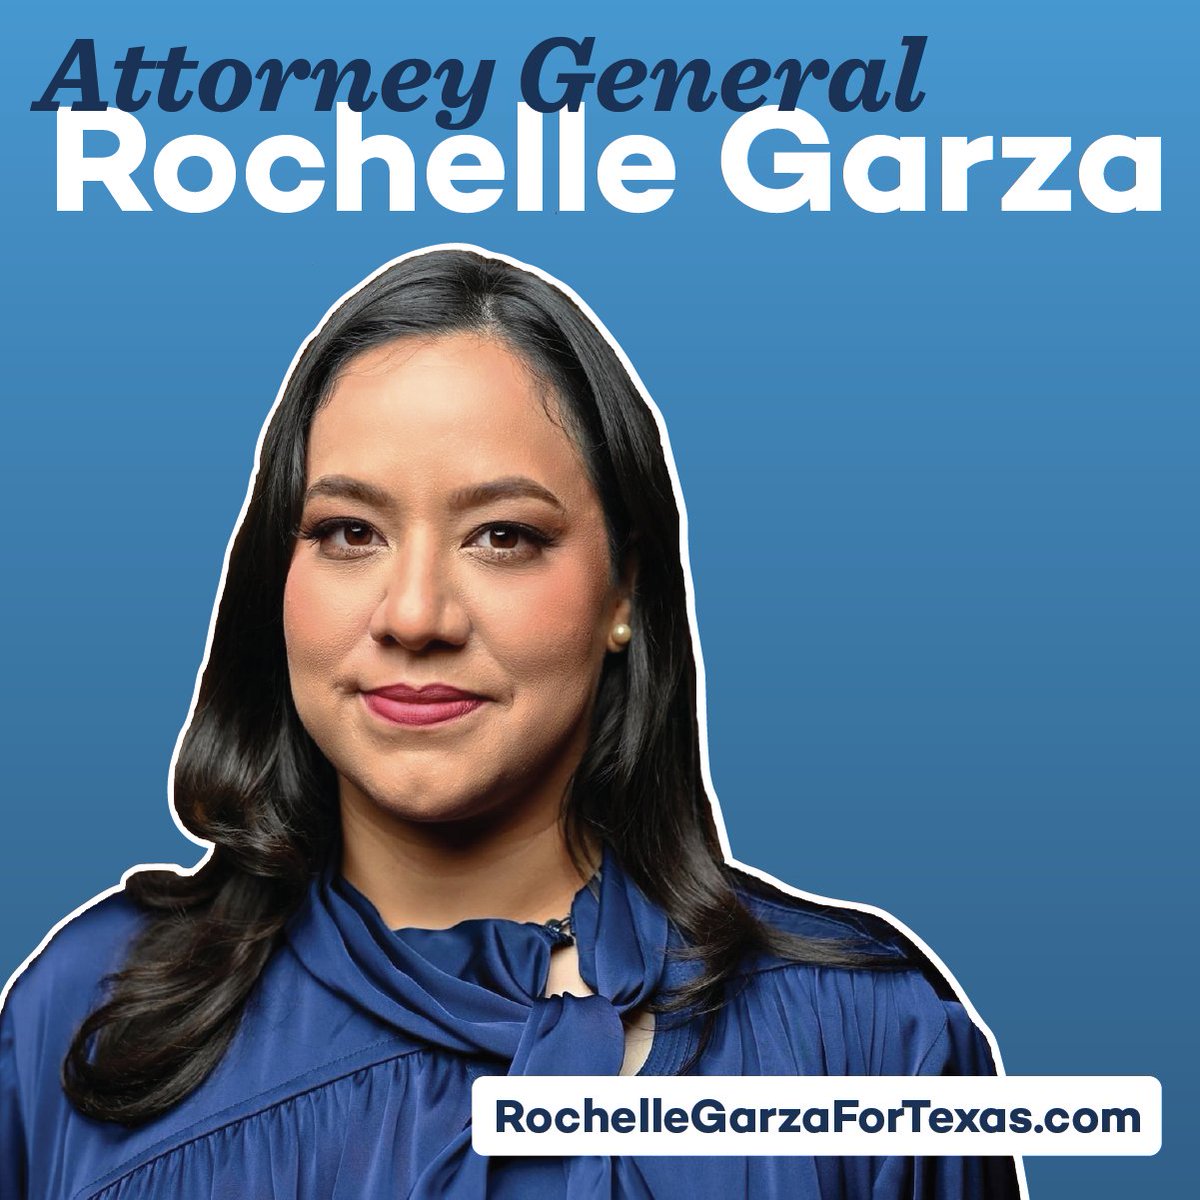 Rochelle Garza - Attorney Generalrochellegarzafortexas.com